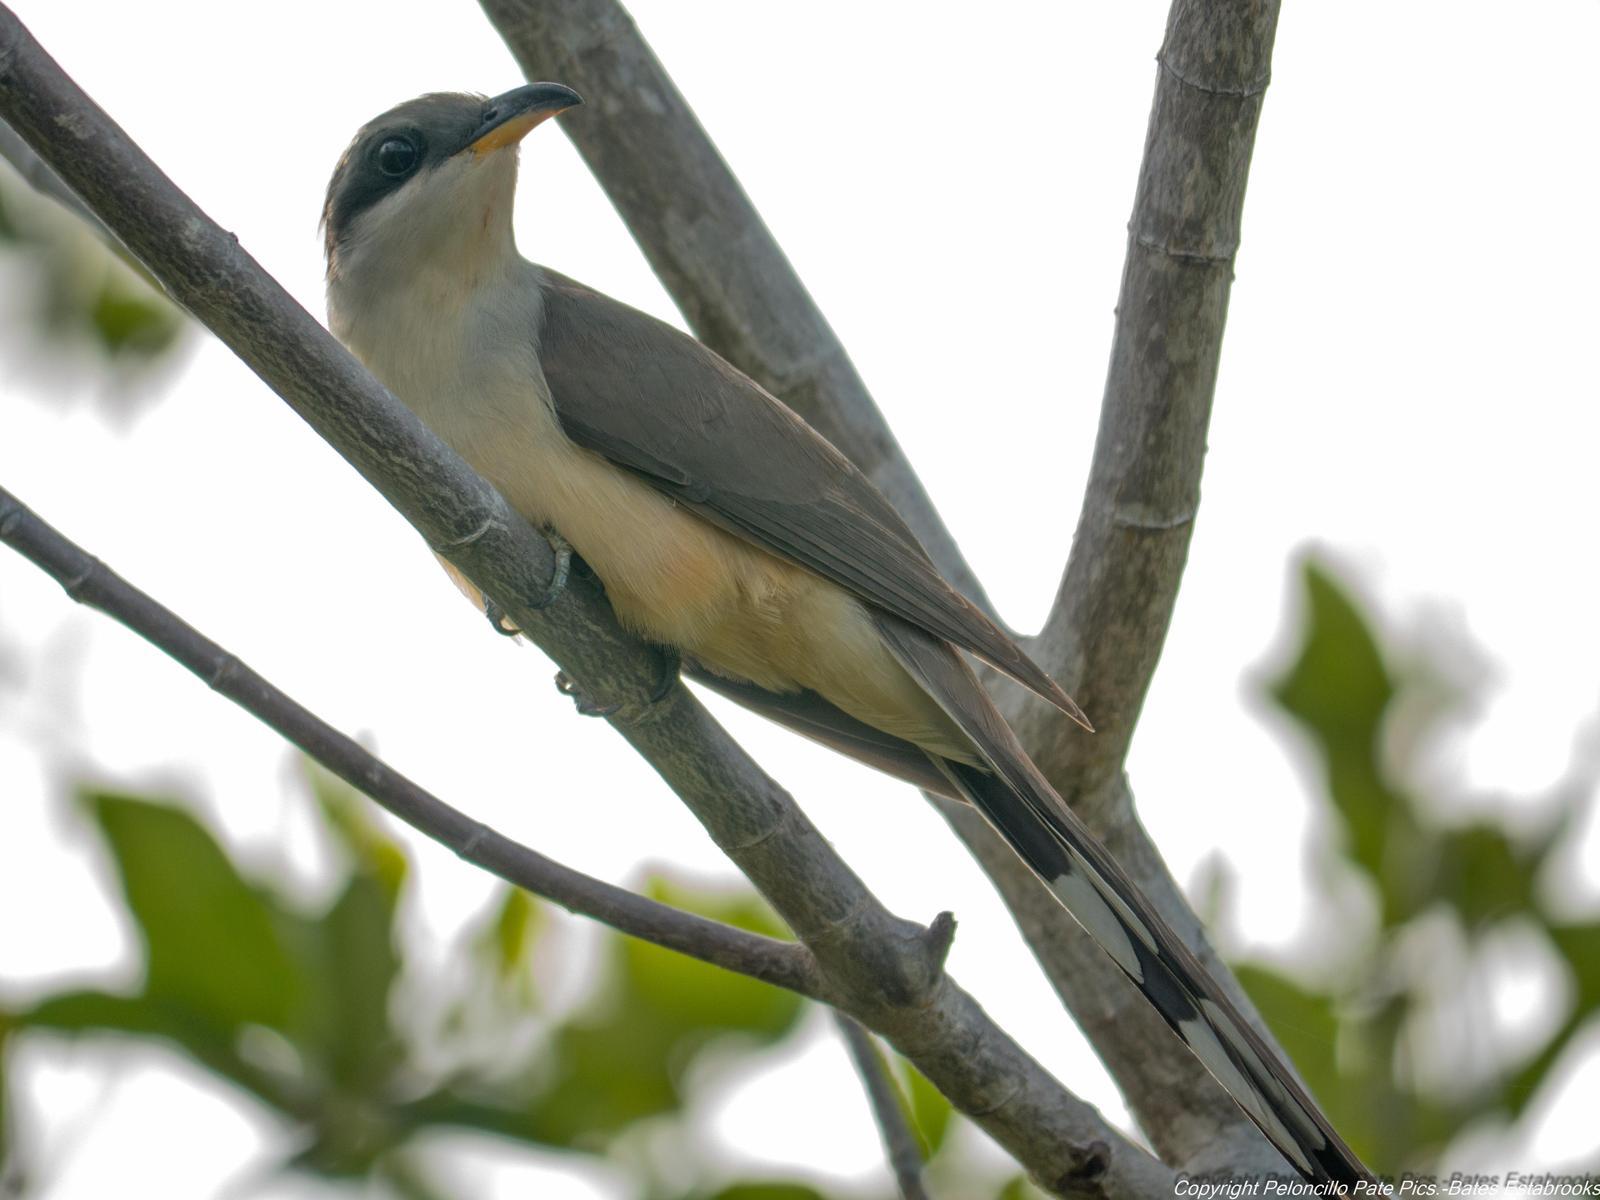 Mangrove Cuckoo Photo by Bates Estabrooks